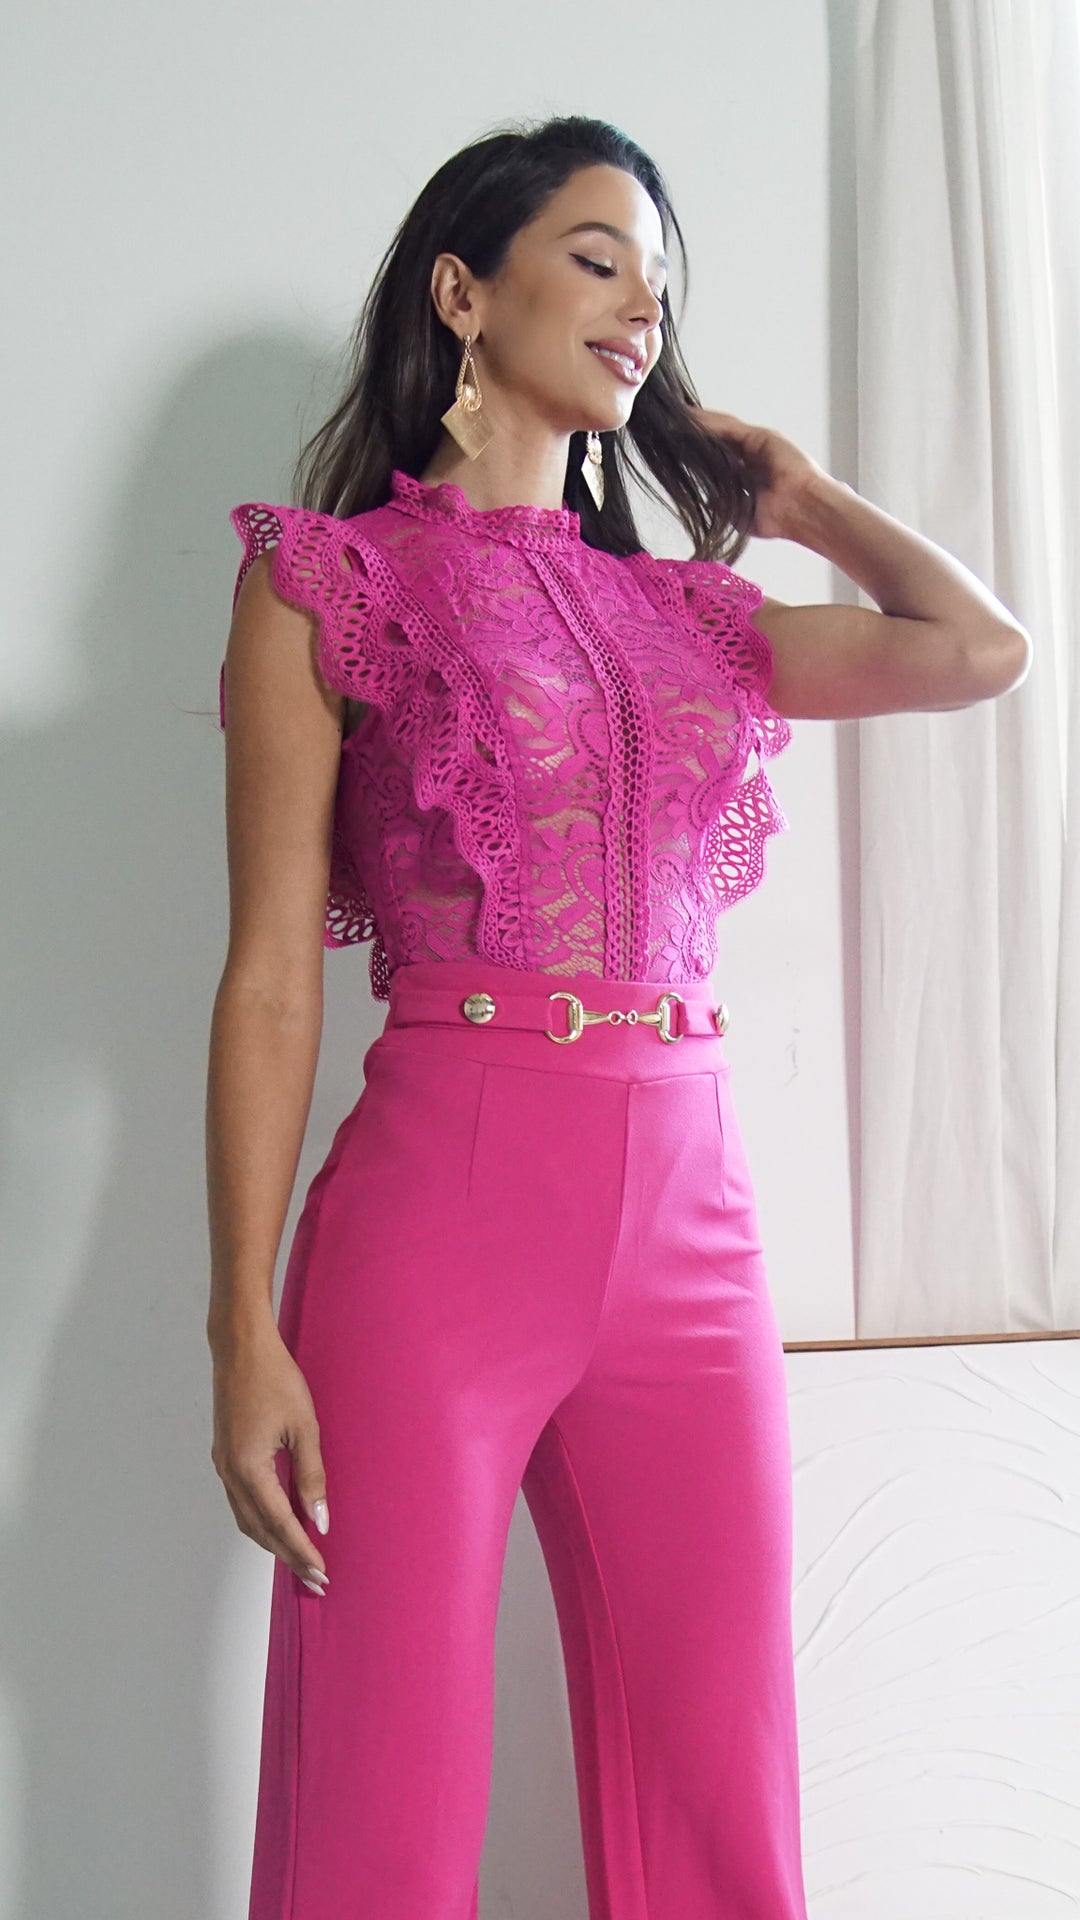 Renzi Lace Bodysuit in Hot Pink - Steps New York